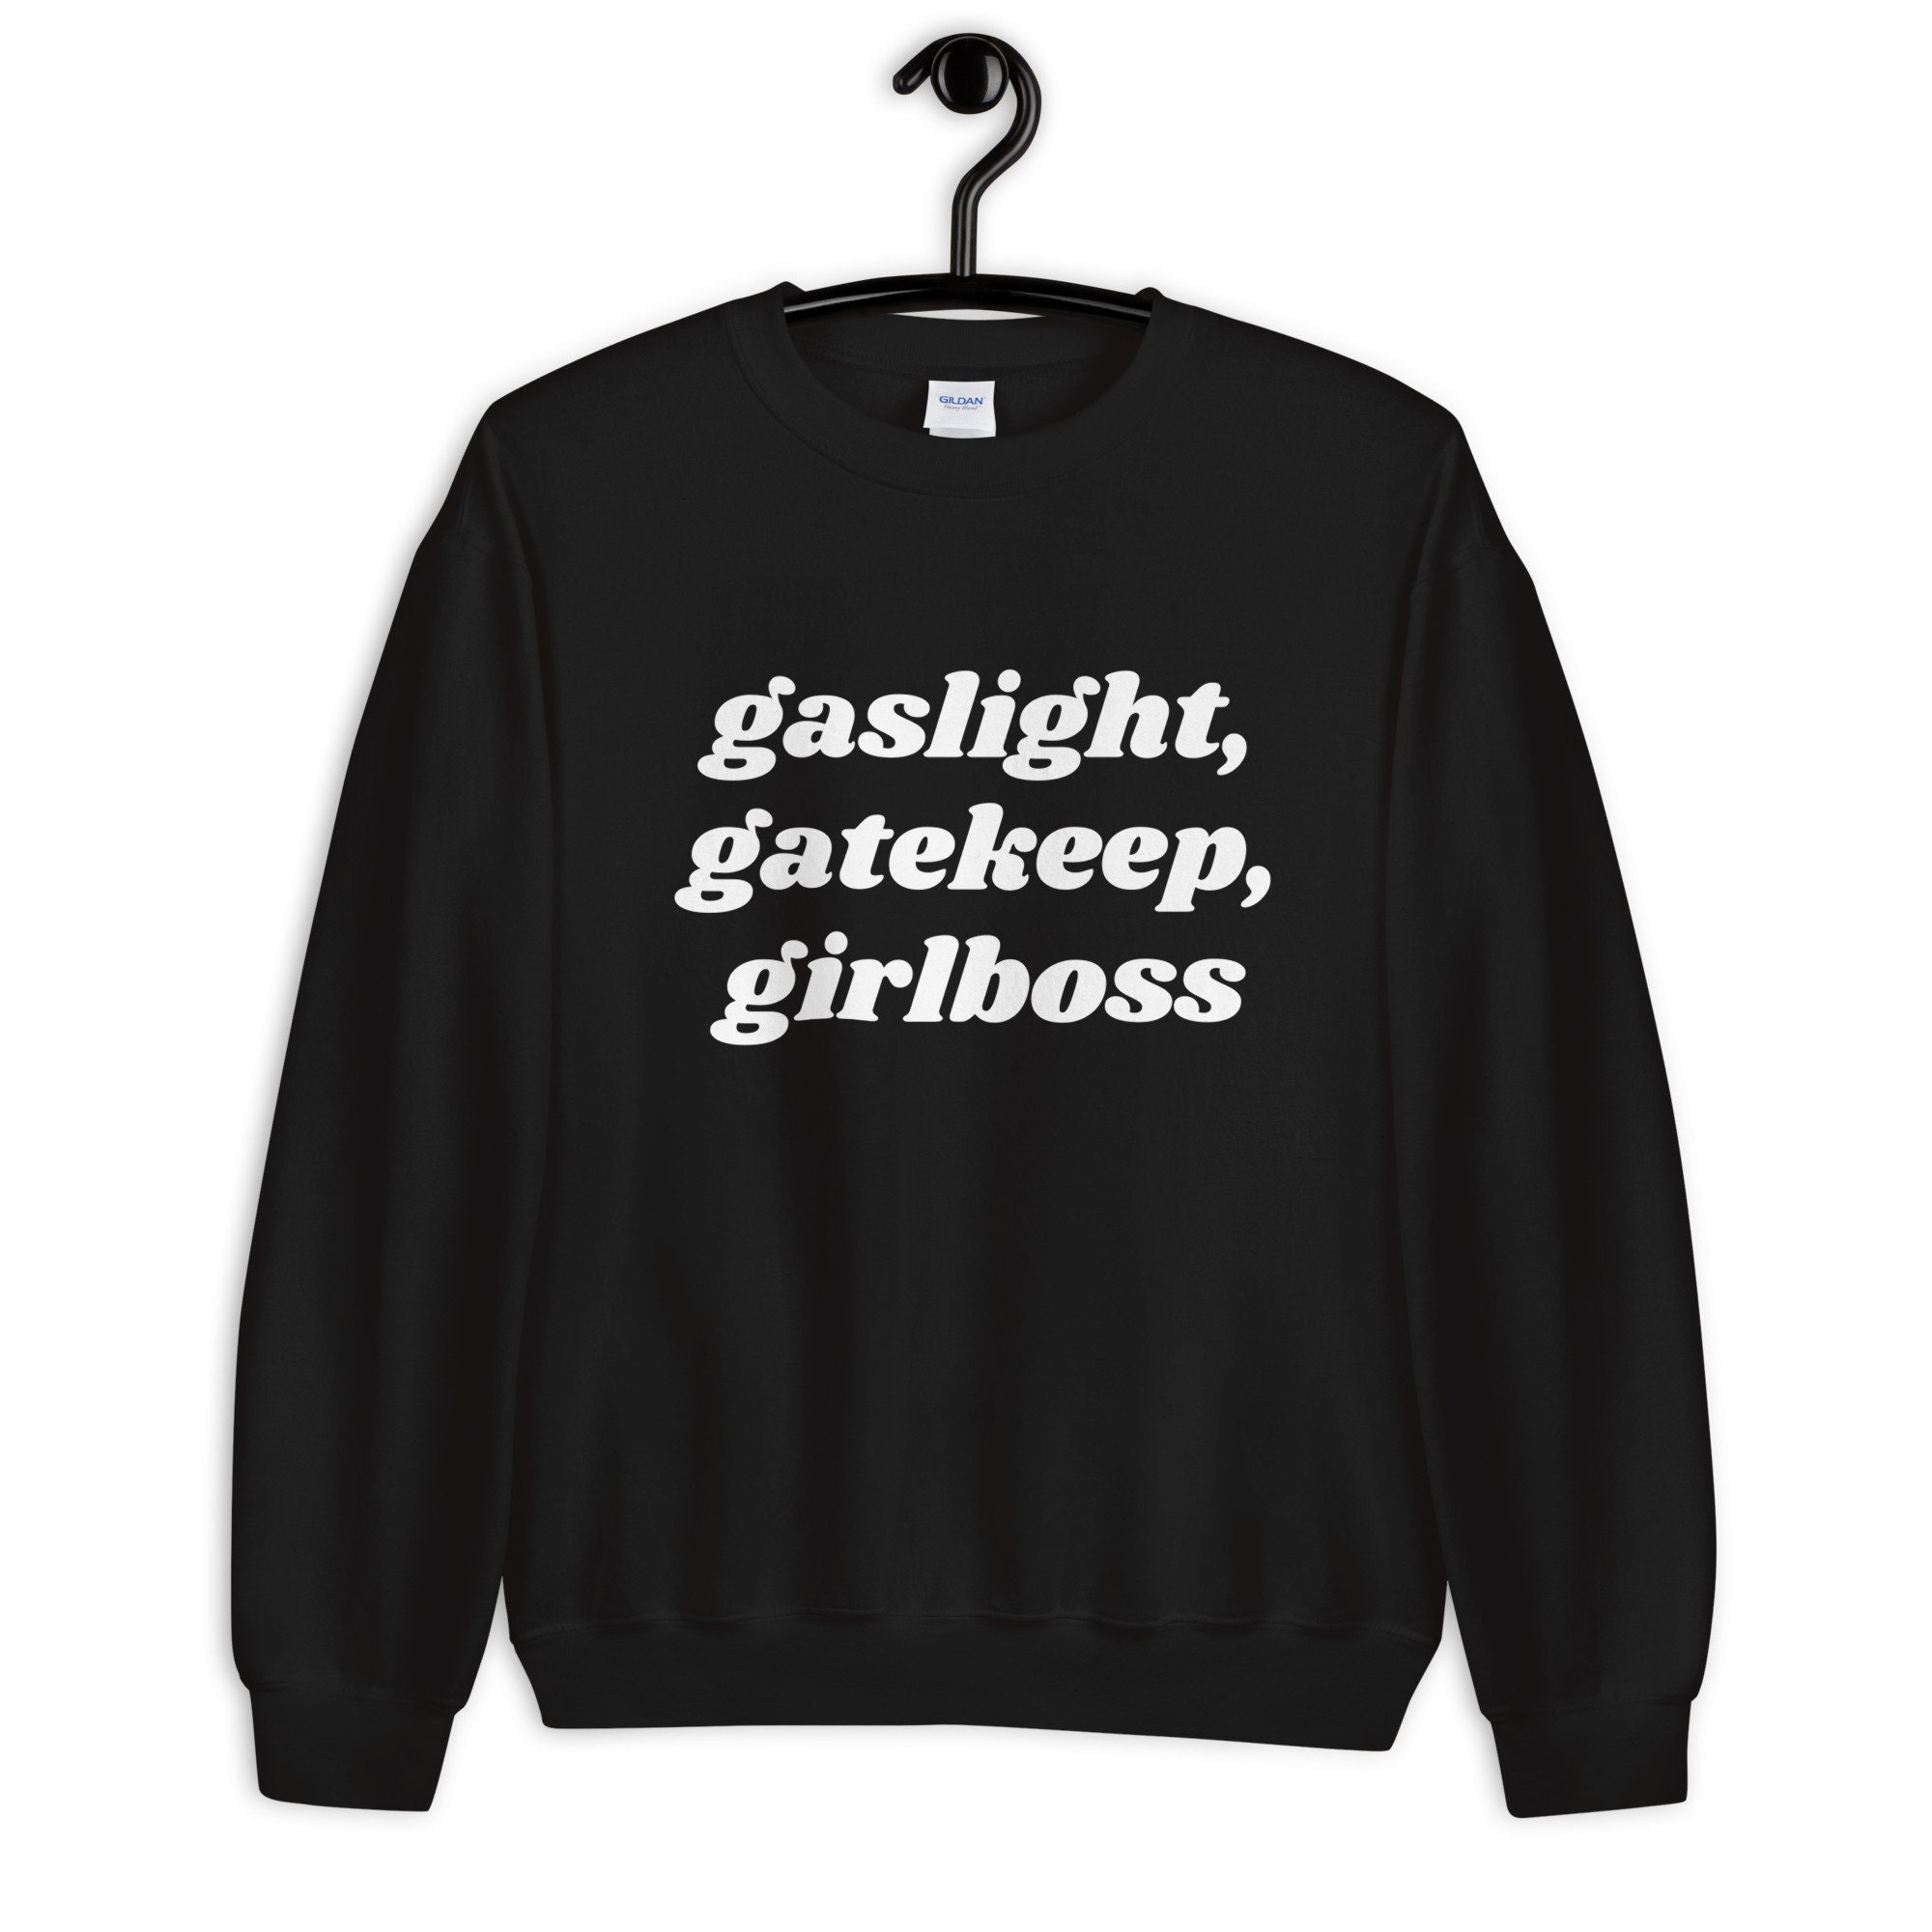 Help I'm feeling girl boss growing pains shirt, hoodie, sweater